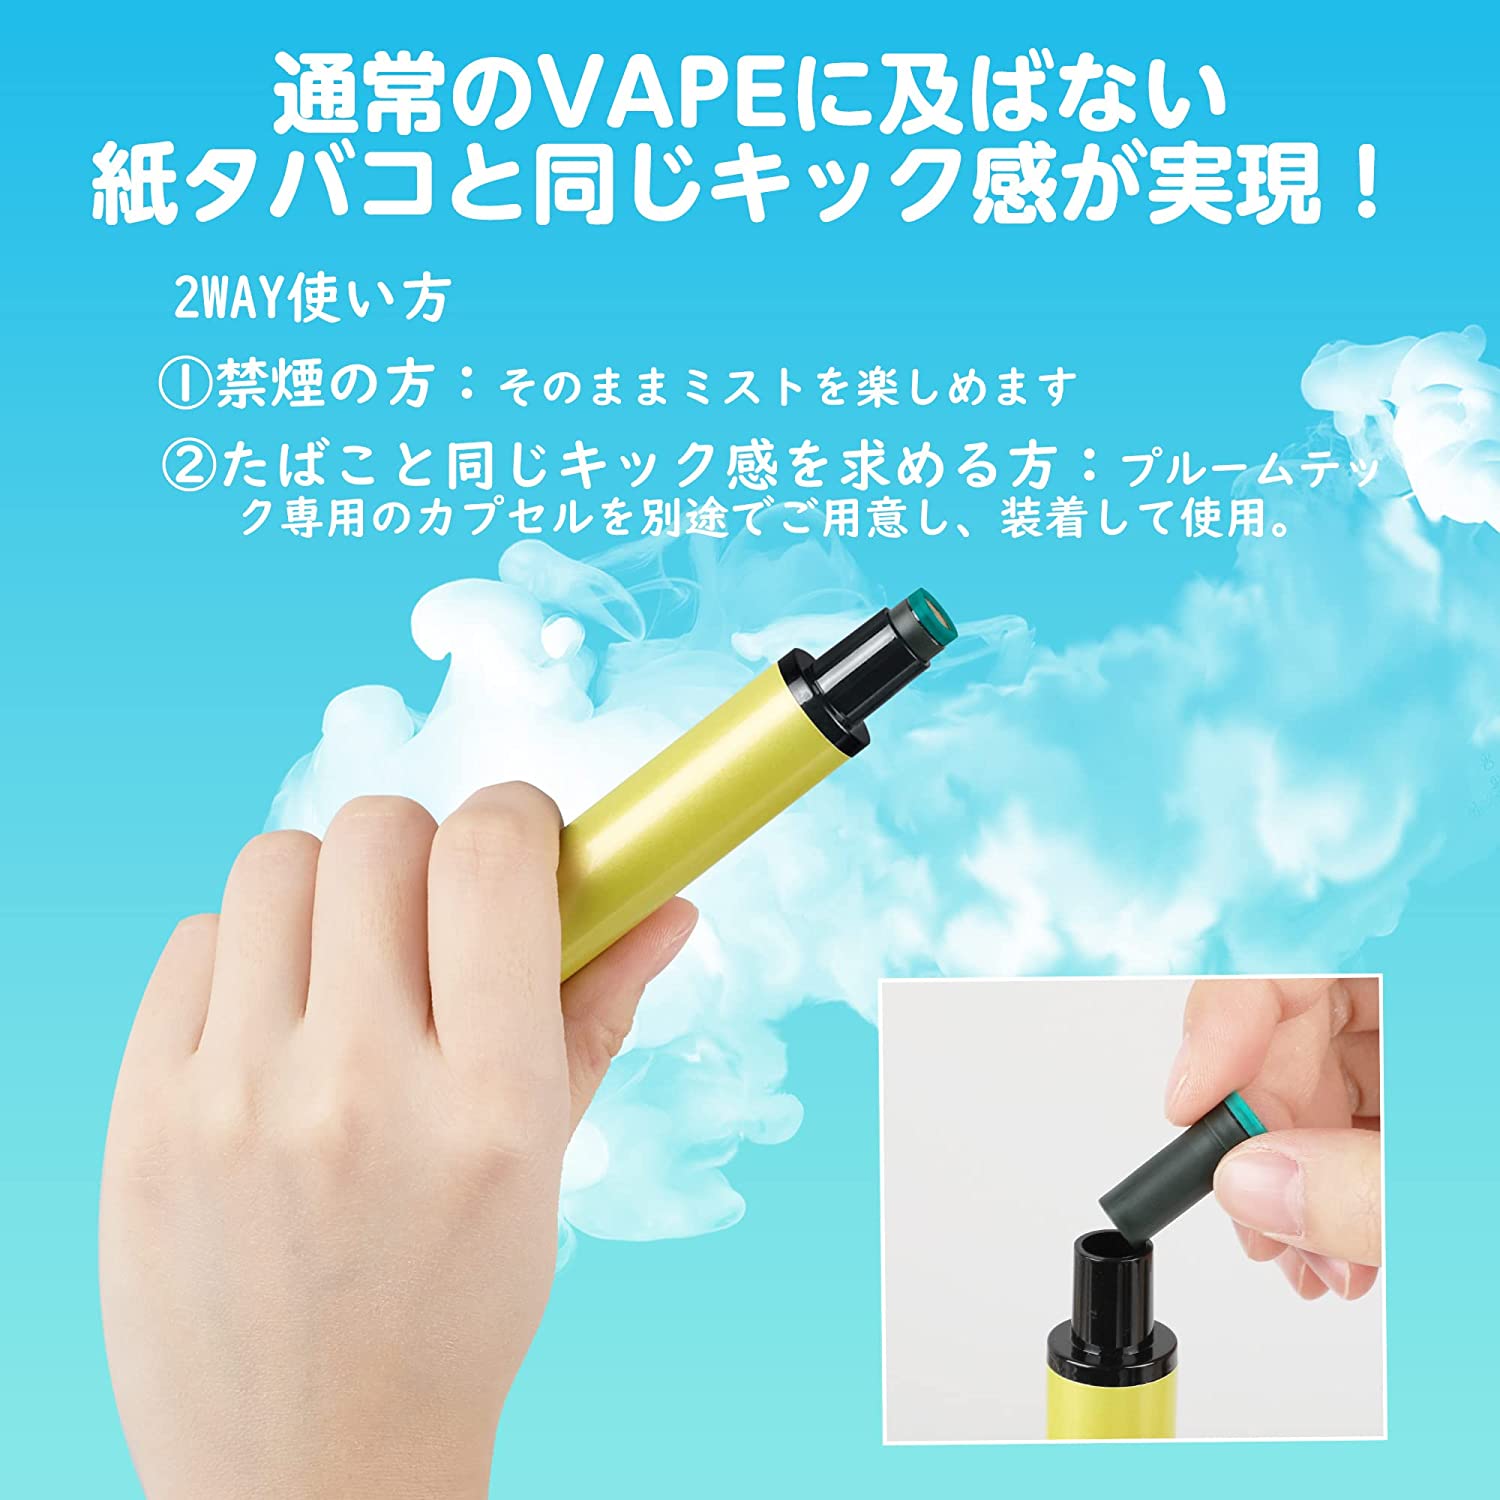 Electronic Cigarette Disposable JT1 Ploom Tech Tobacco Capsule Attachable Vape Explosive Smoke Zero Nicotine Auto Switch MIX-1